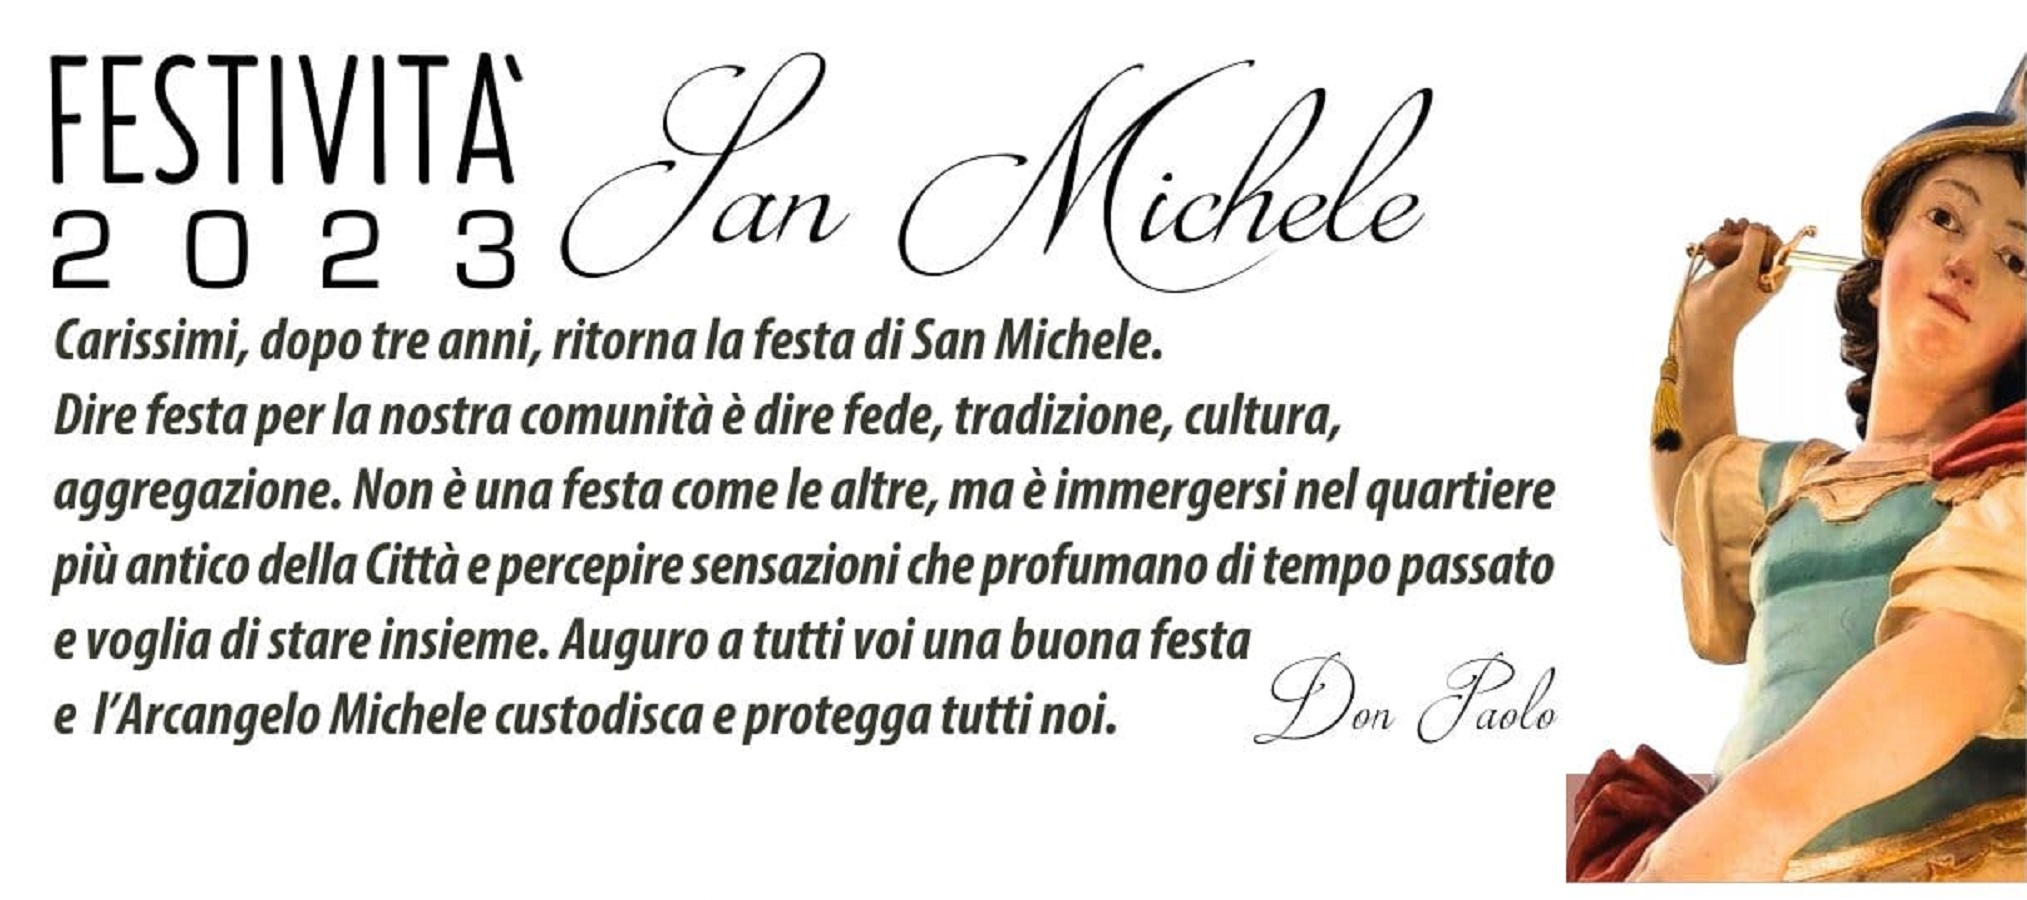 Festa San Michele 2023 Mondragone.jpg